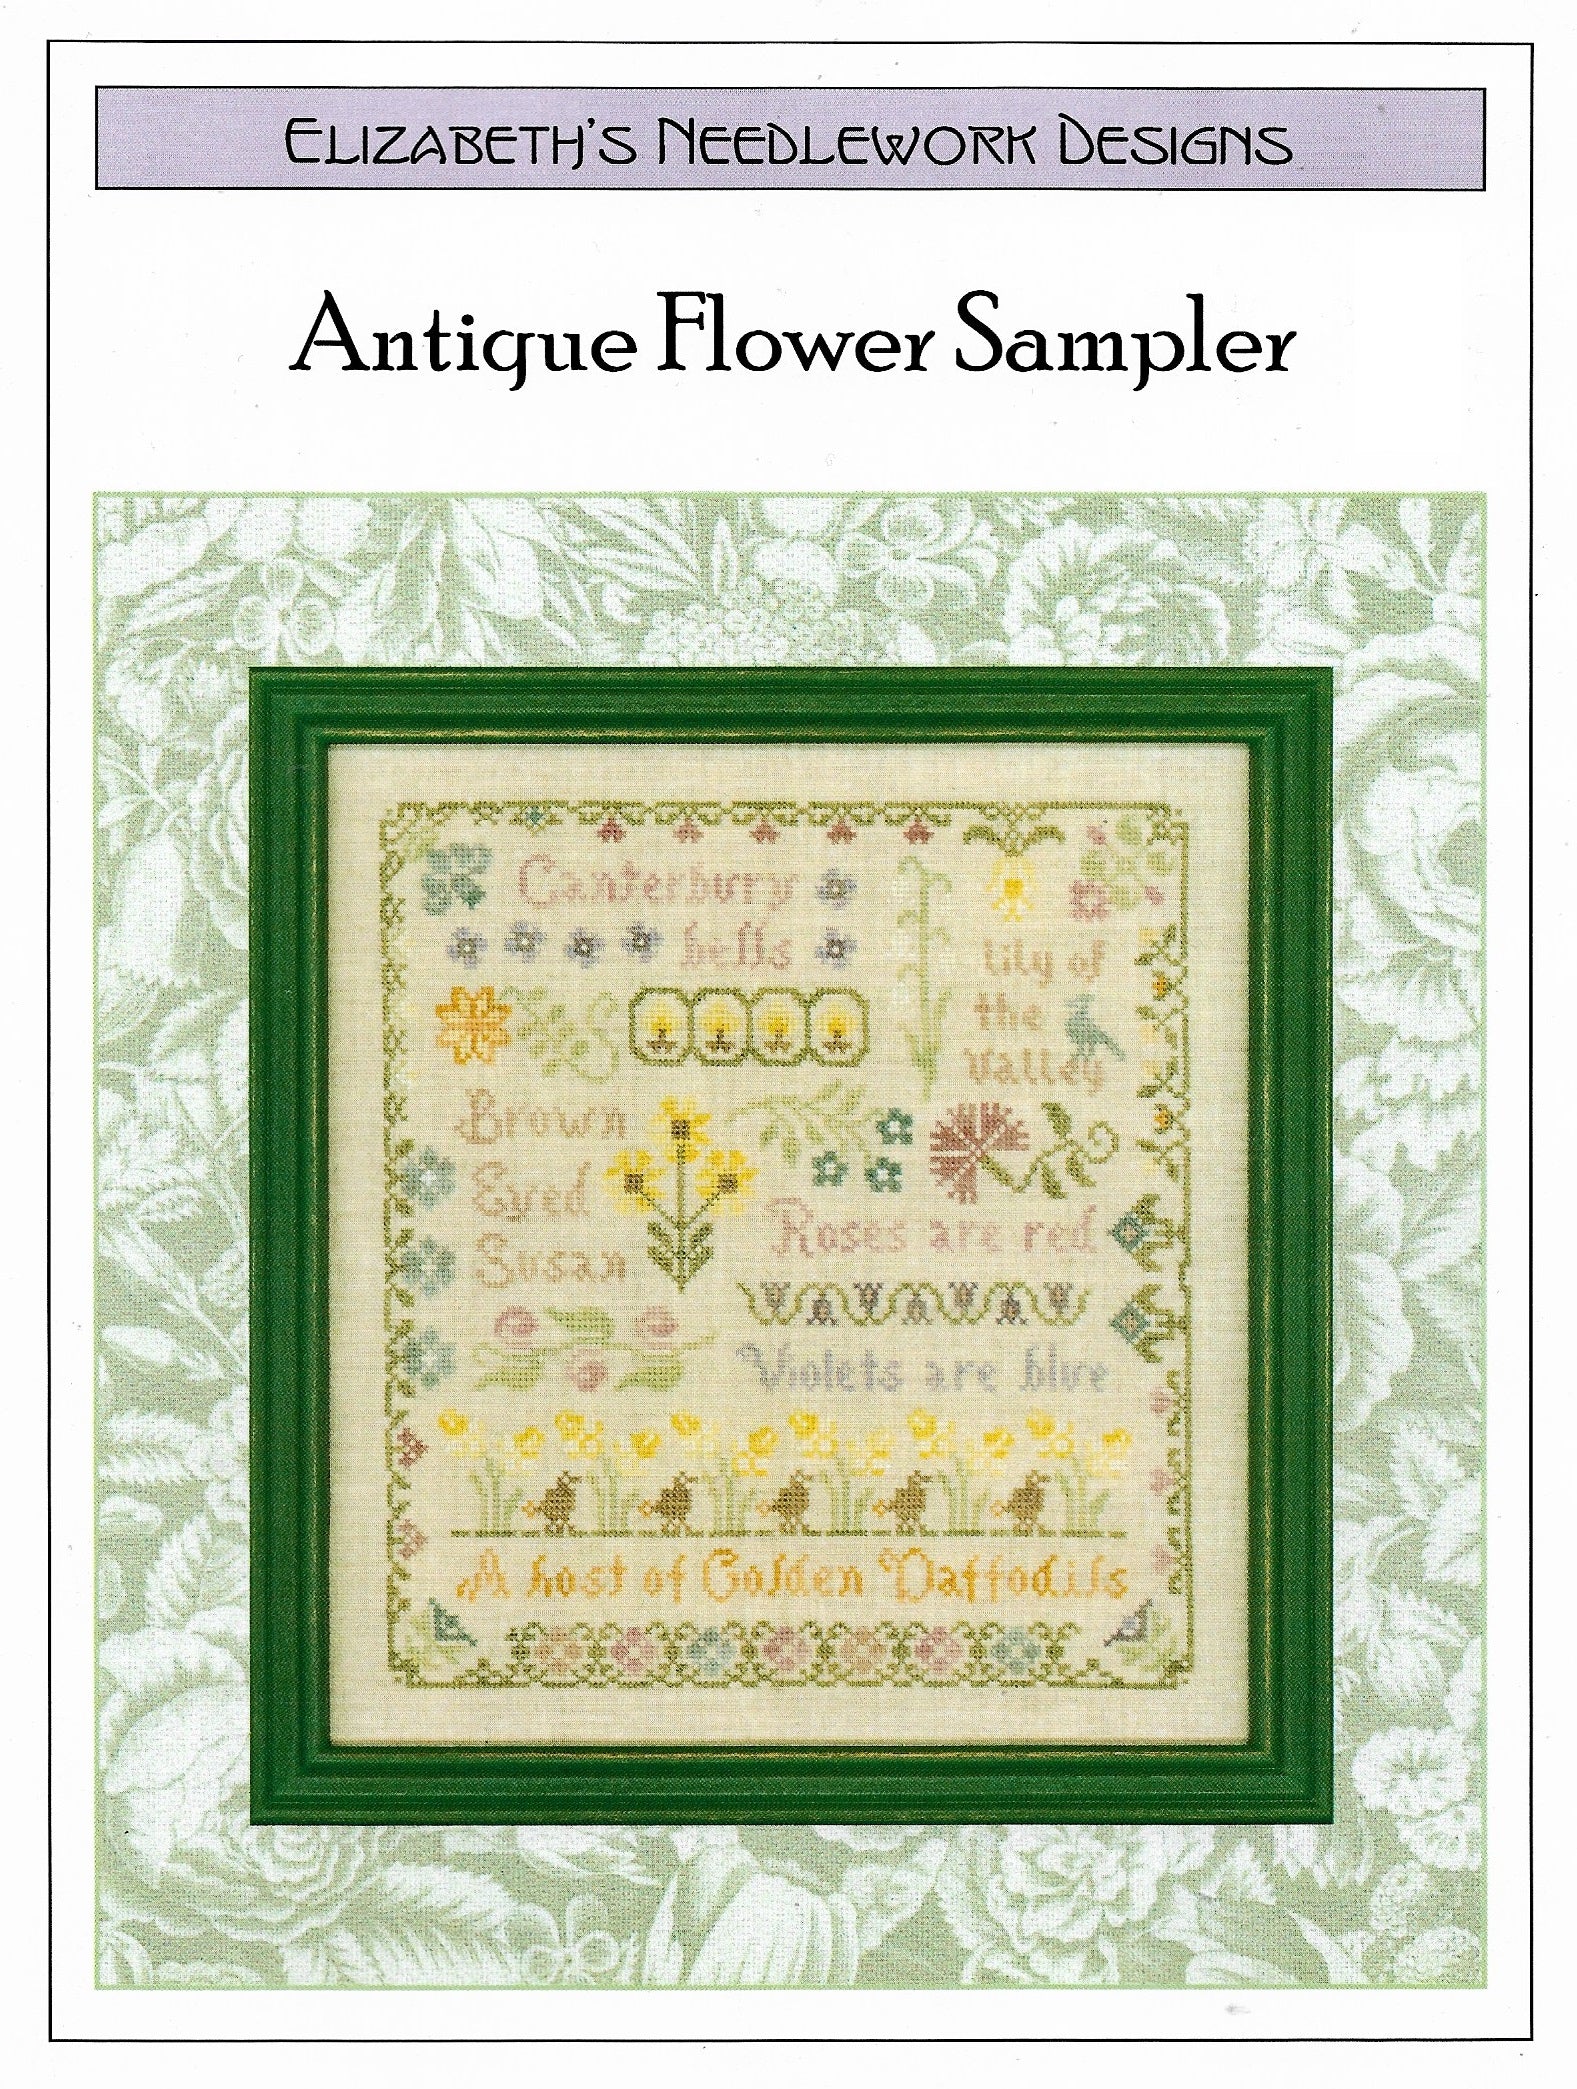 Elizabeth's Designs Antique Flower Sampler cross stitch pattern